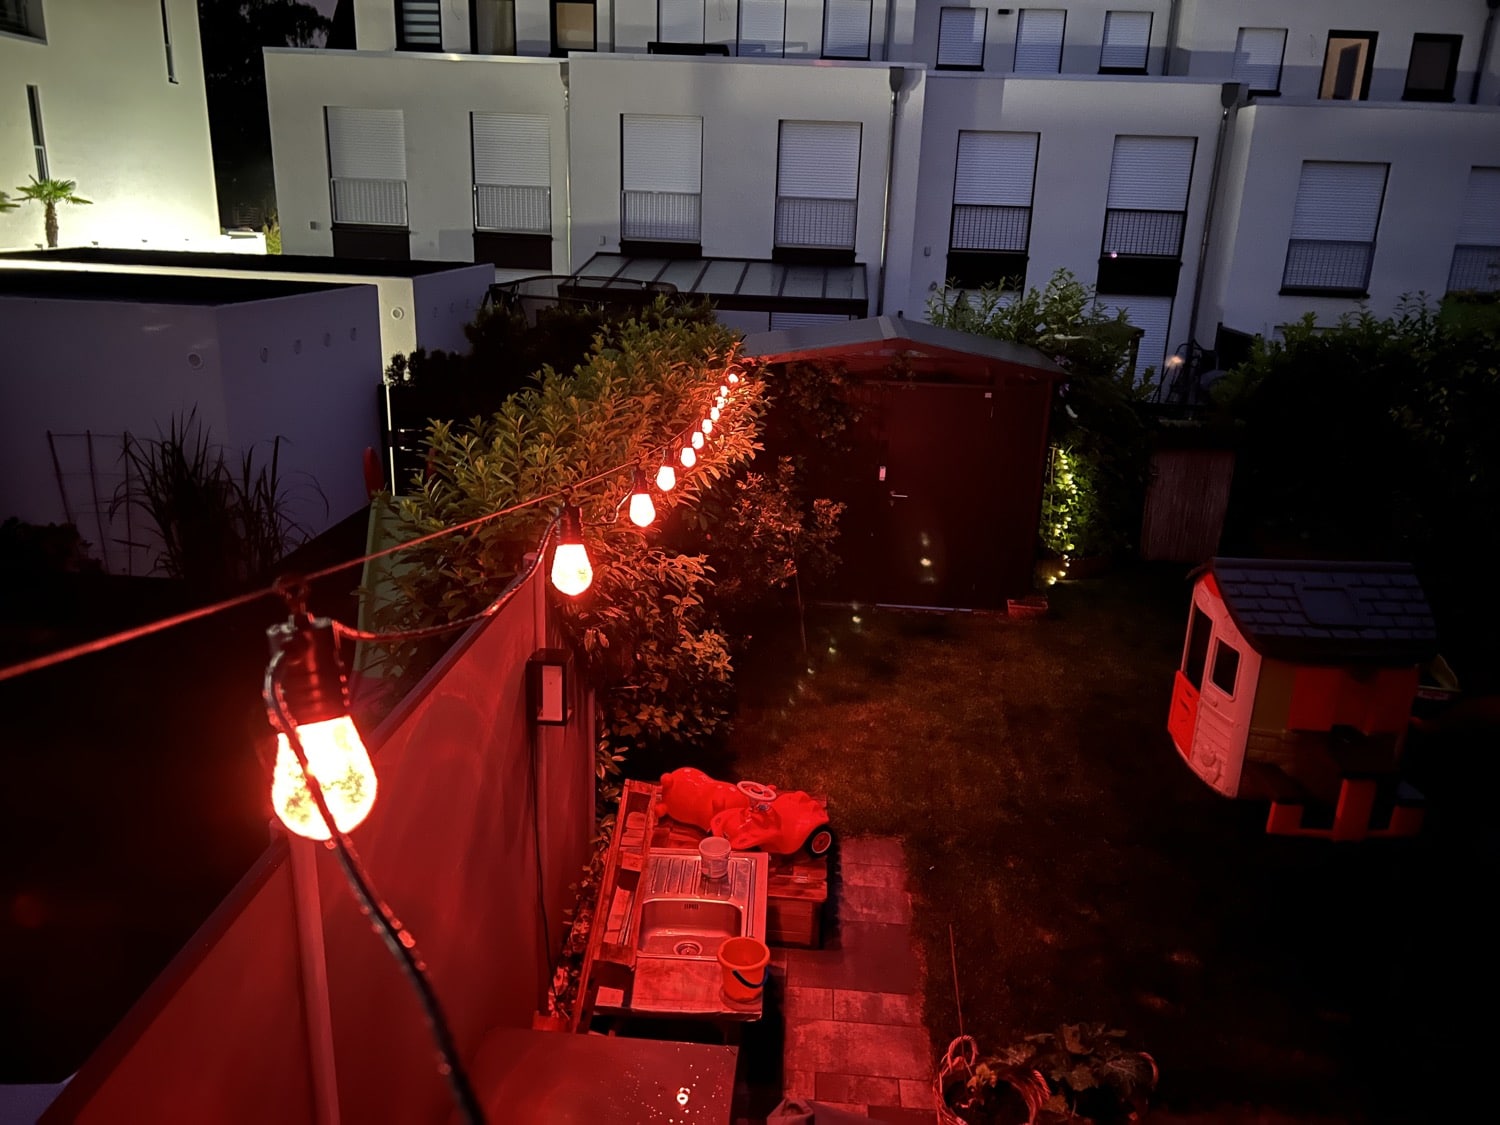 Hueblog: Hue-Hersteller bringt Outdoor-Lichterkette mit WLAN-Anbindung